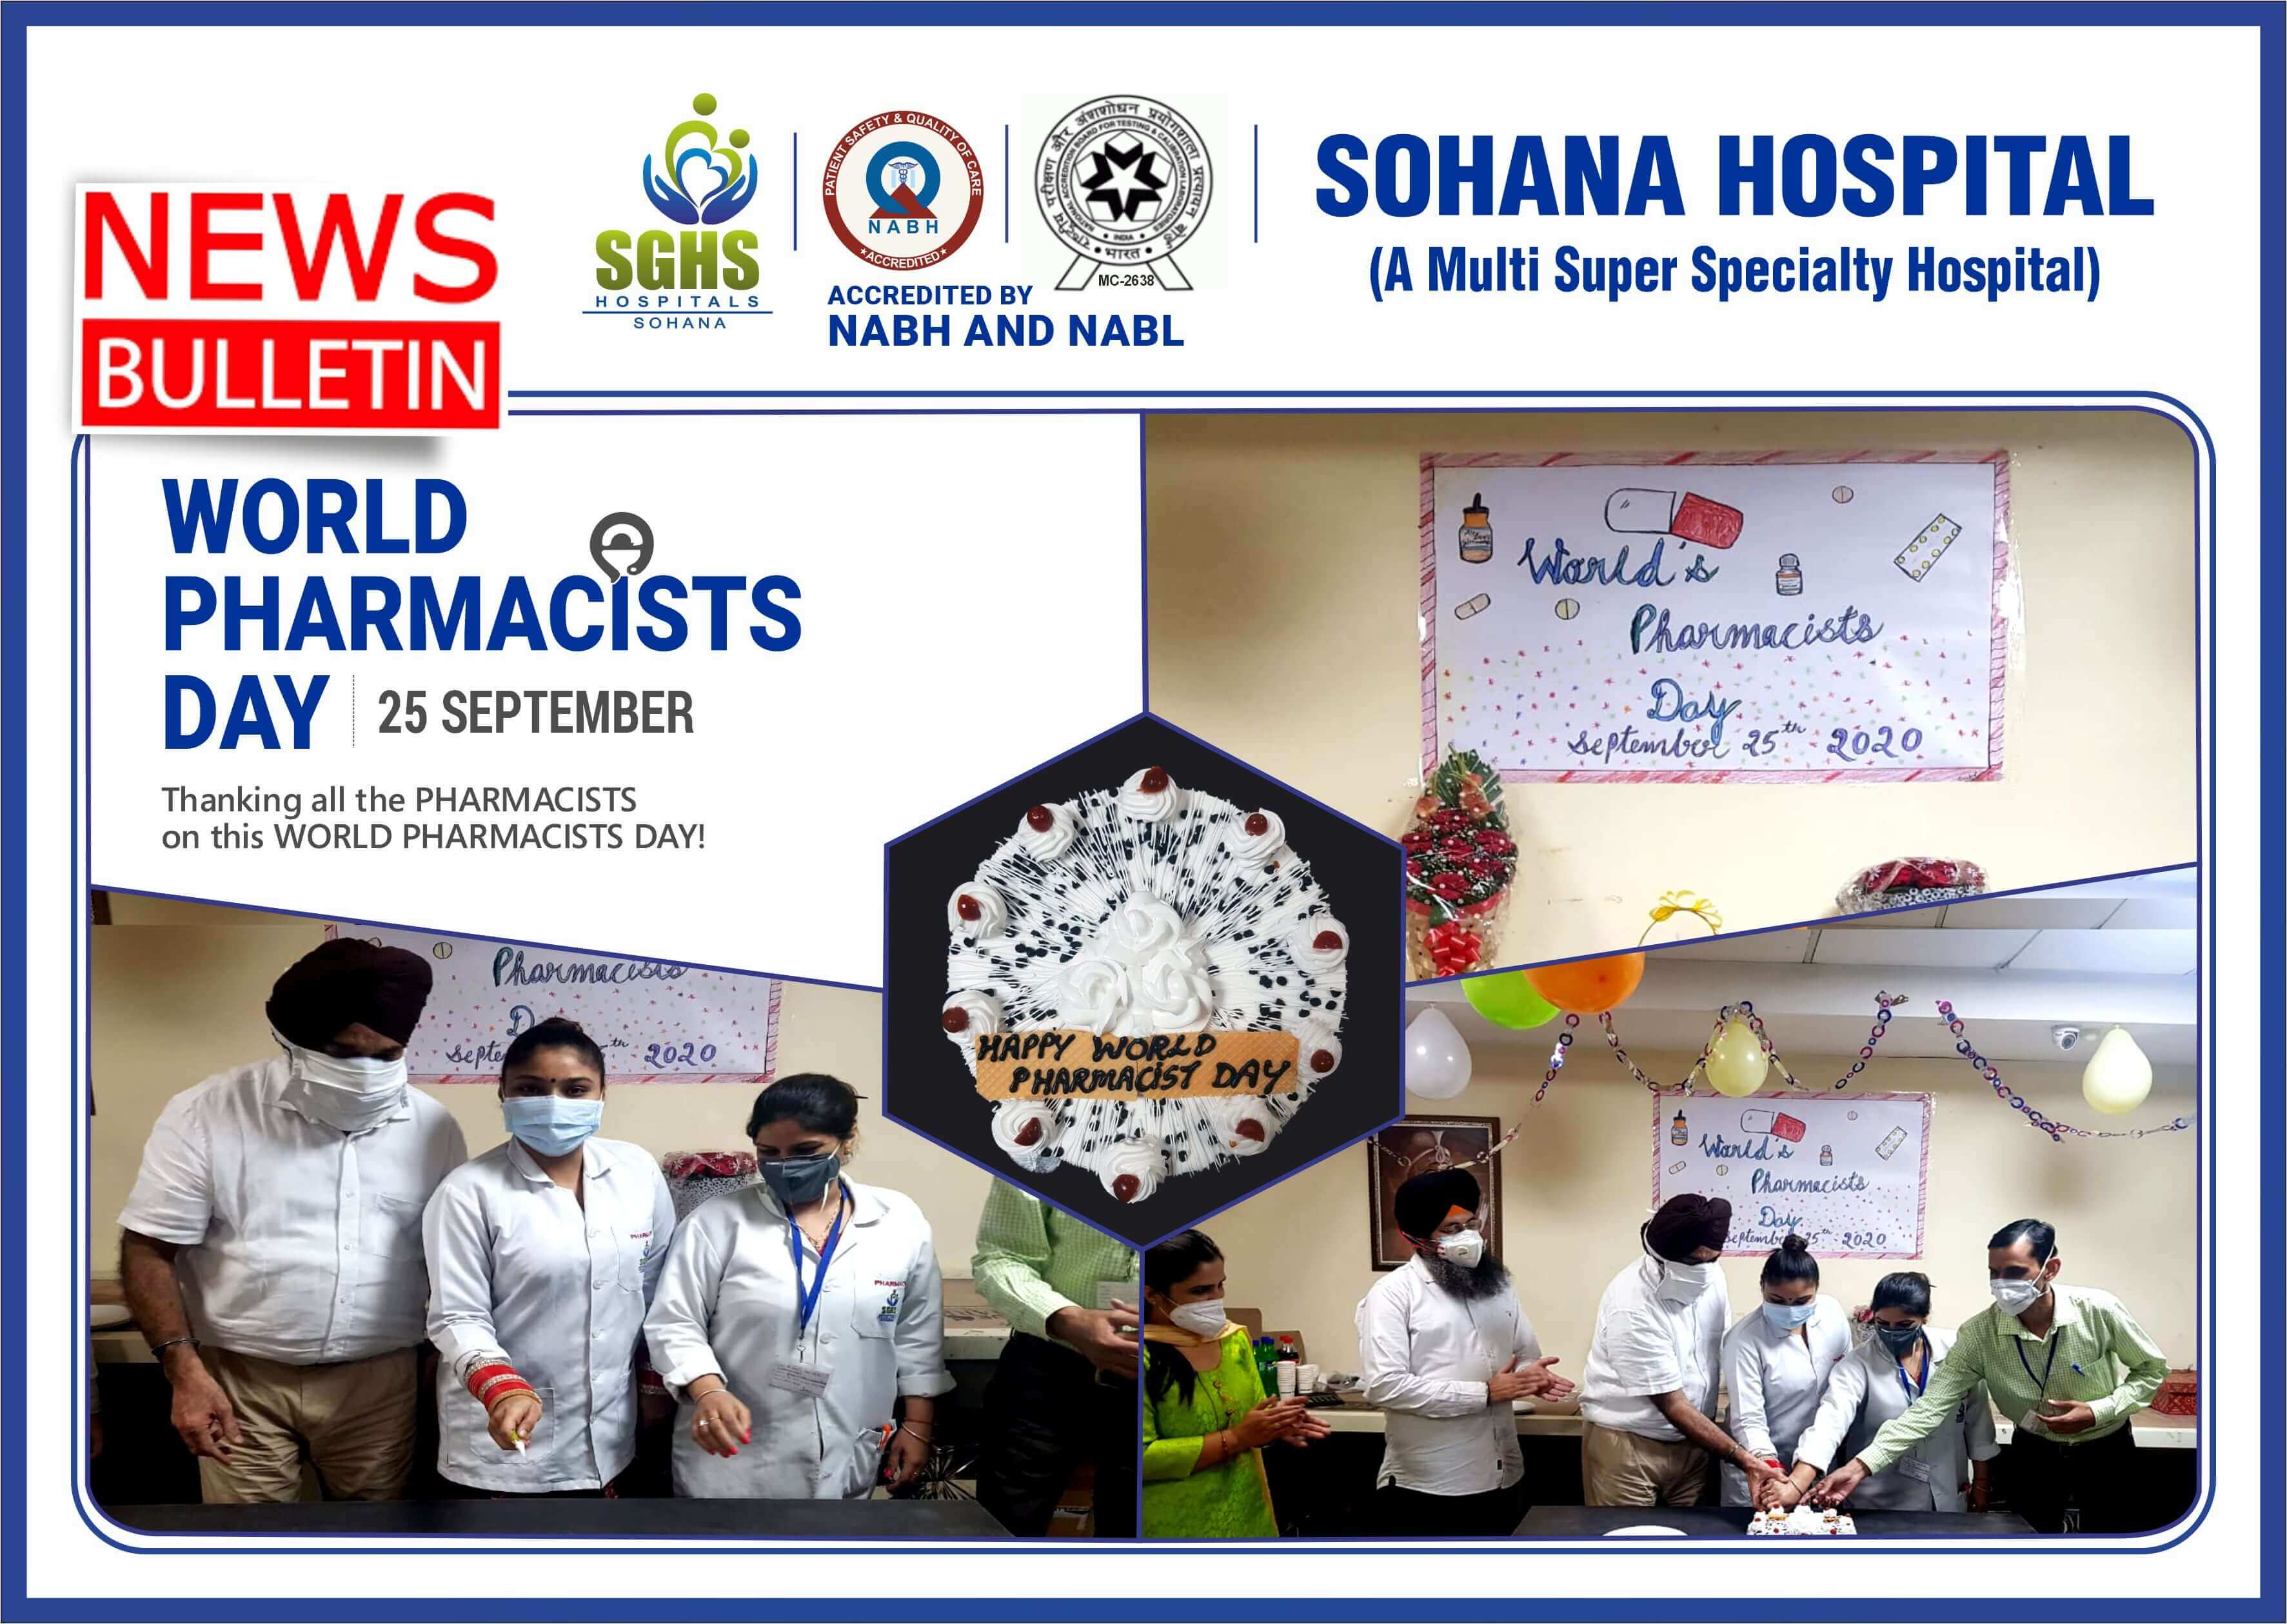 Sohana Hospital Image